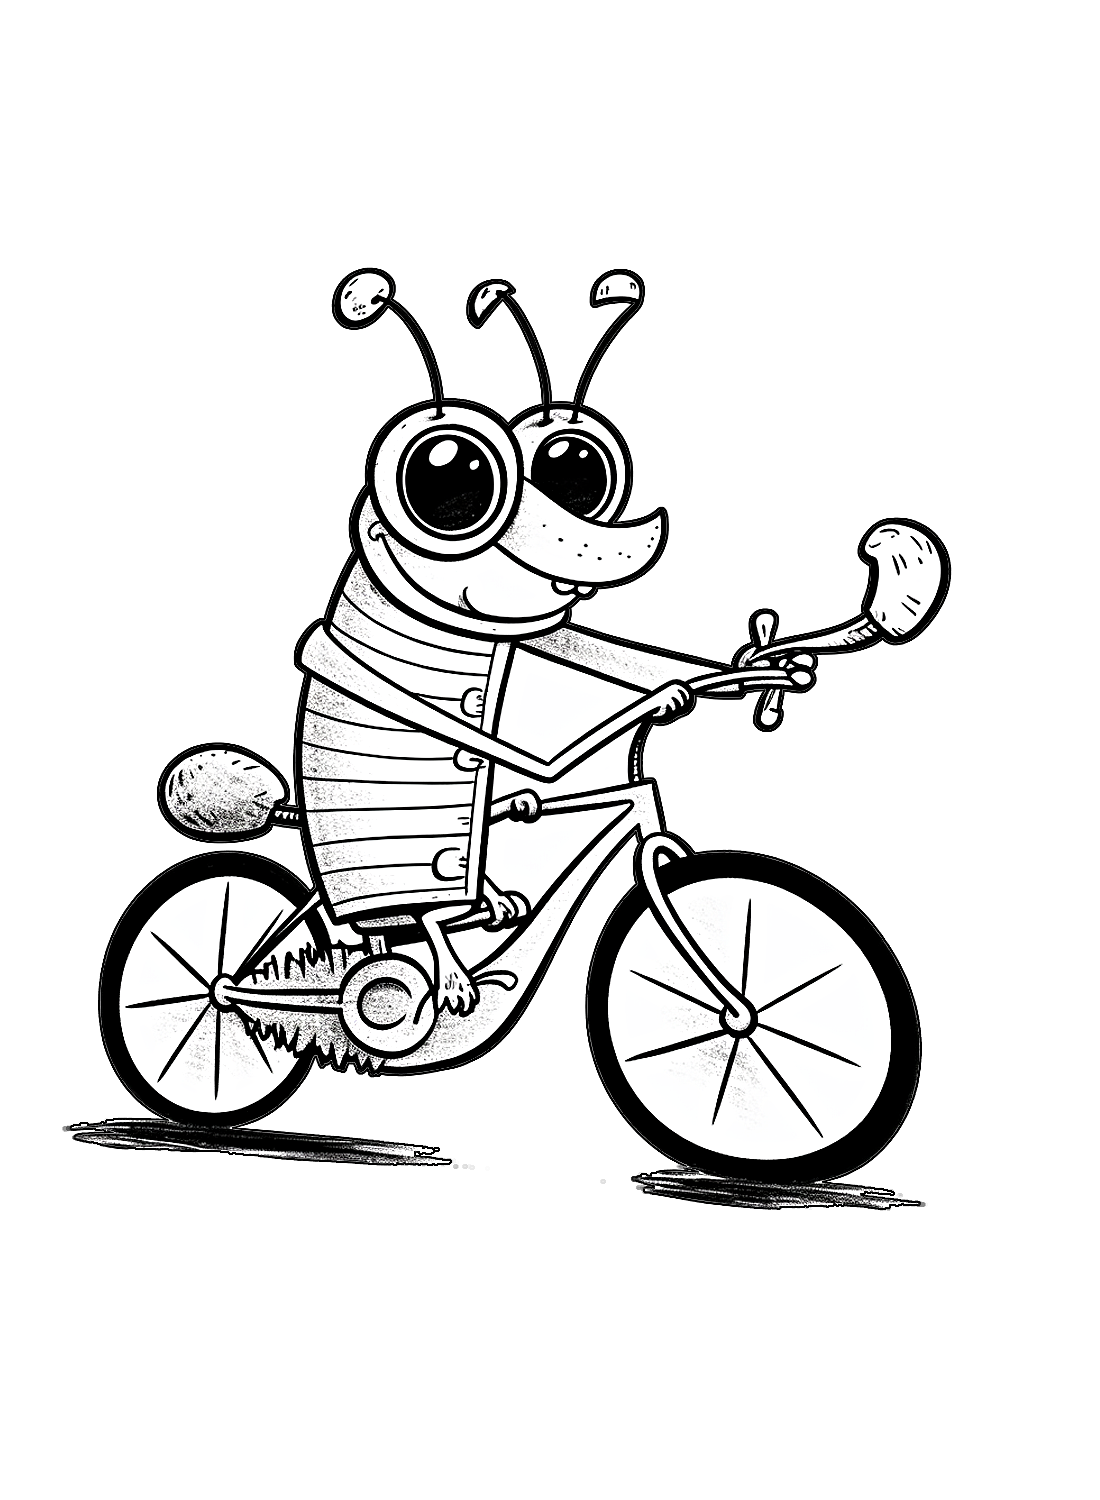 Una Cucaracha Divertida y una bicicleta de Cucaracha